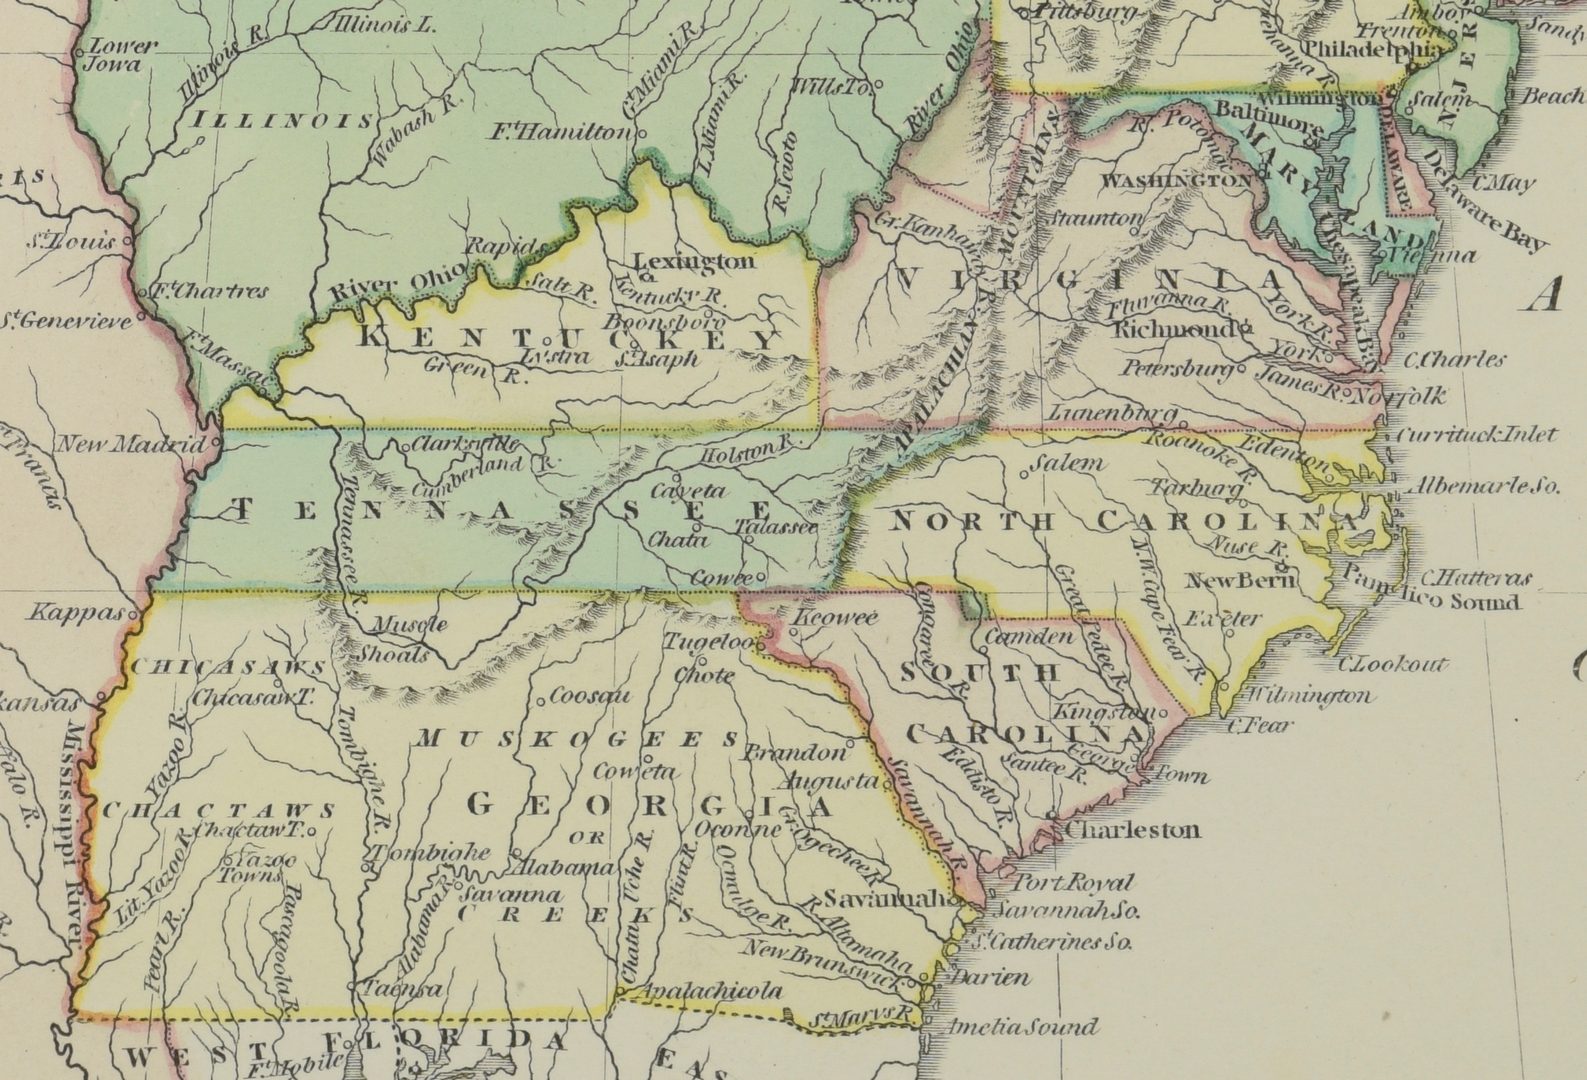 Lot 270: 2 Maps of US – 18th century